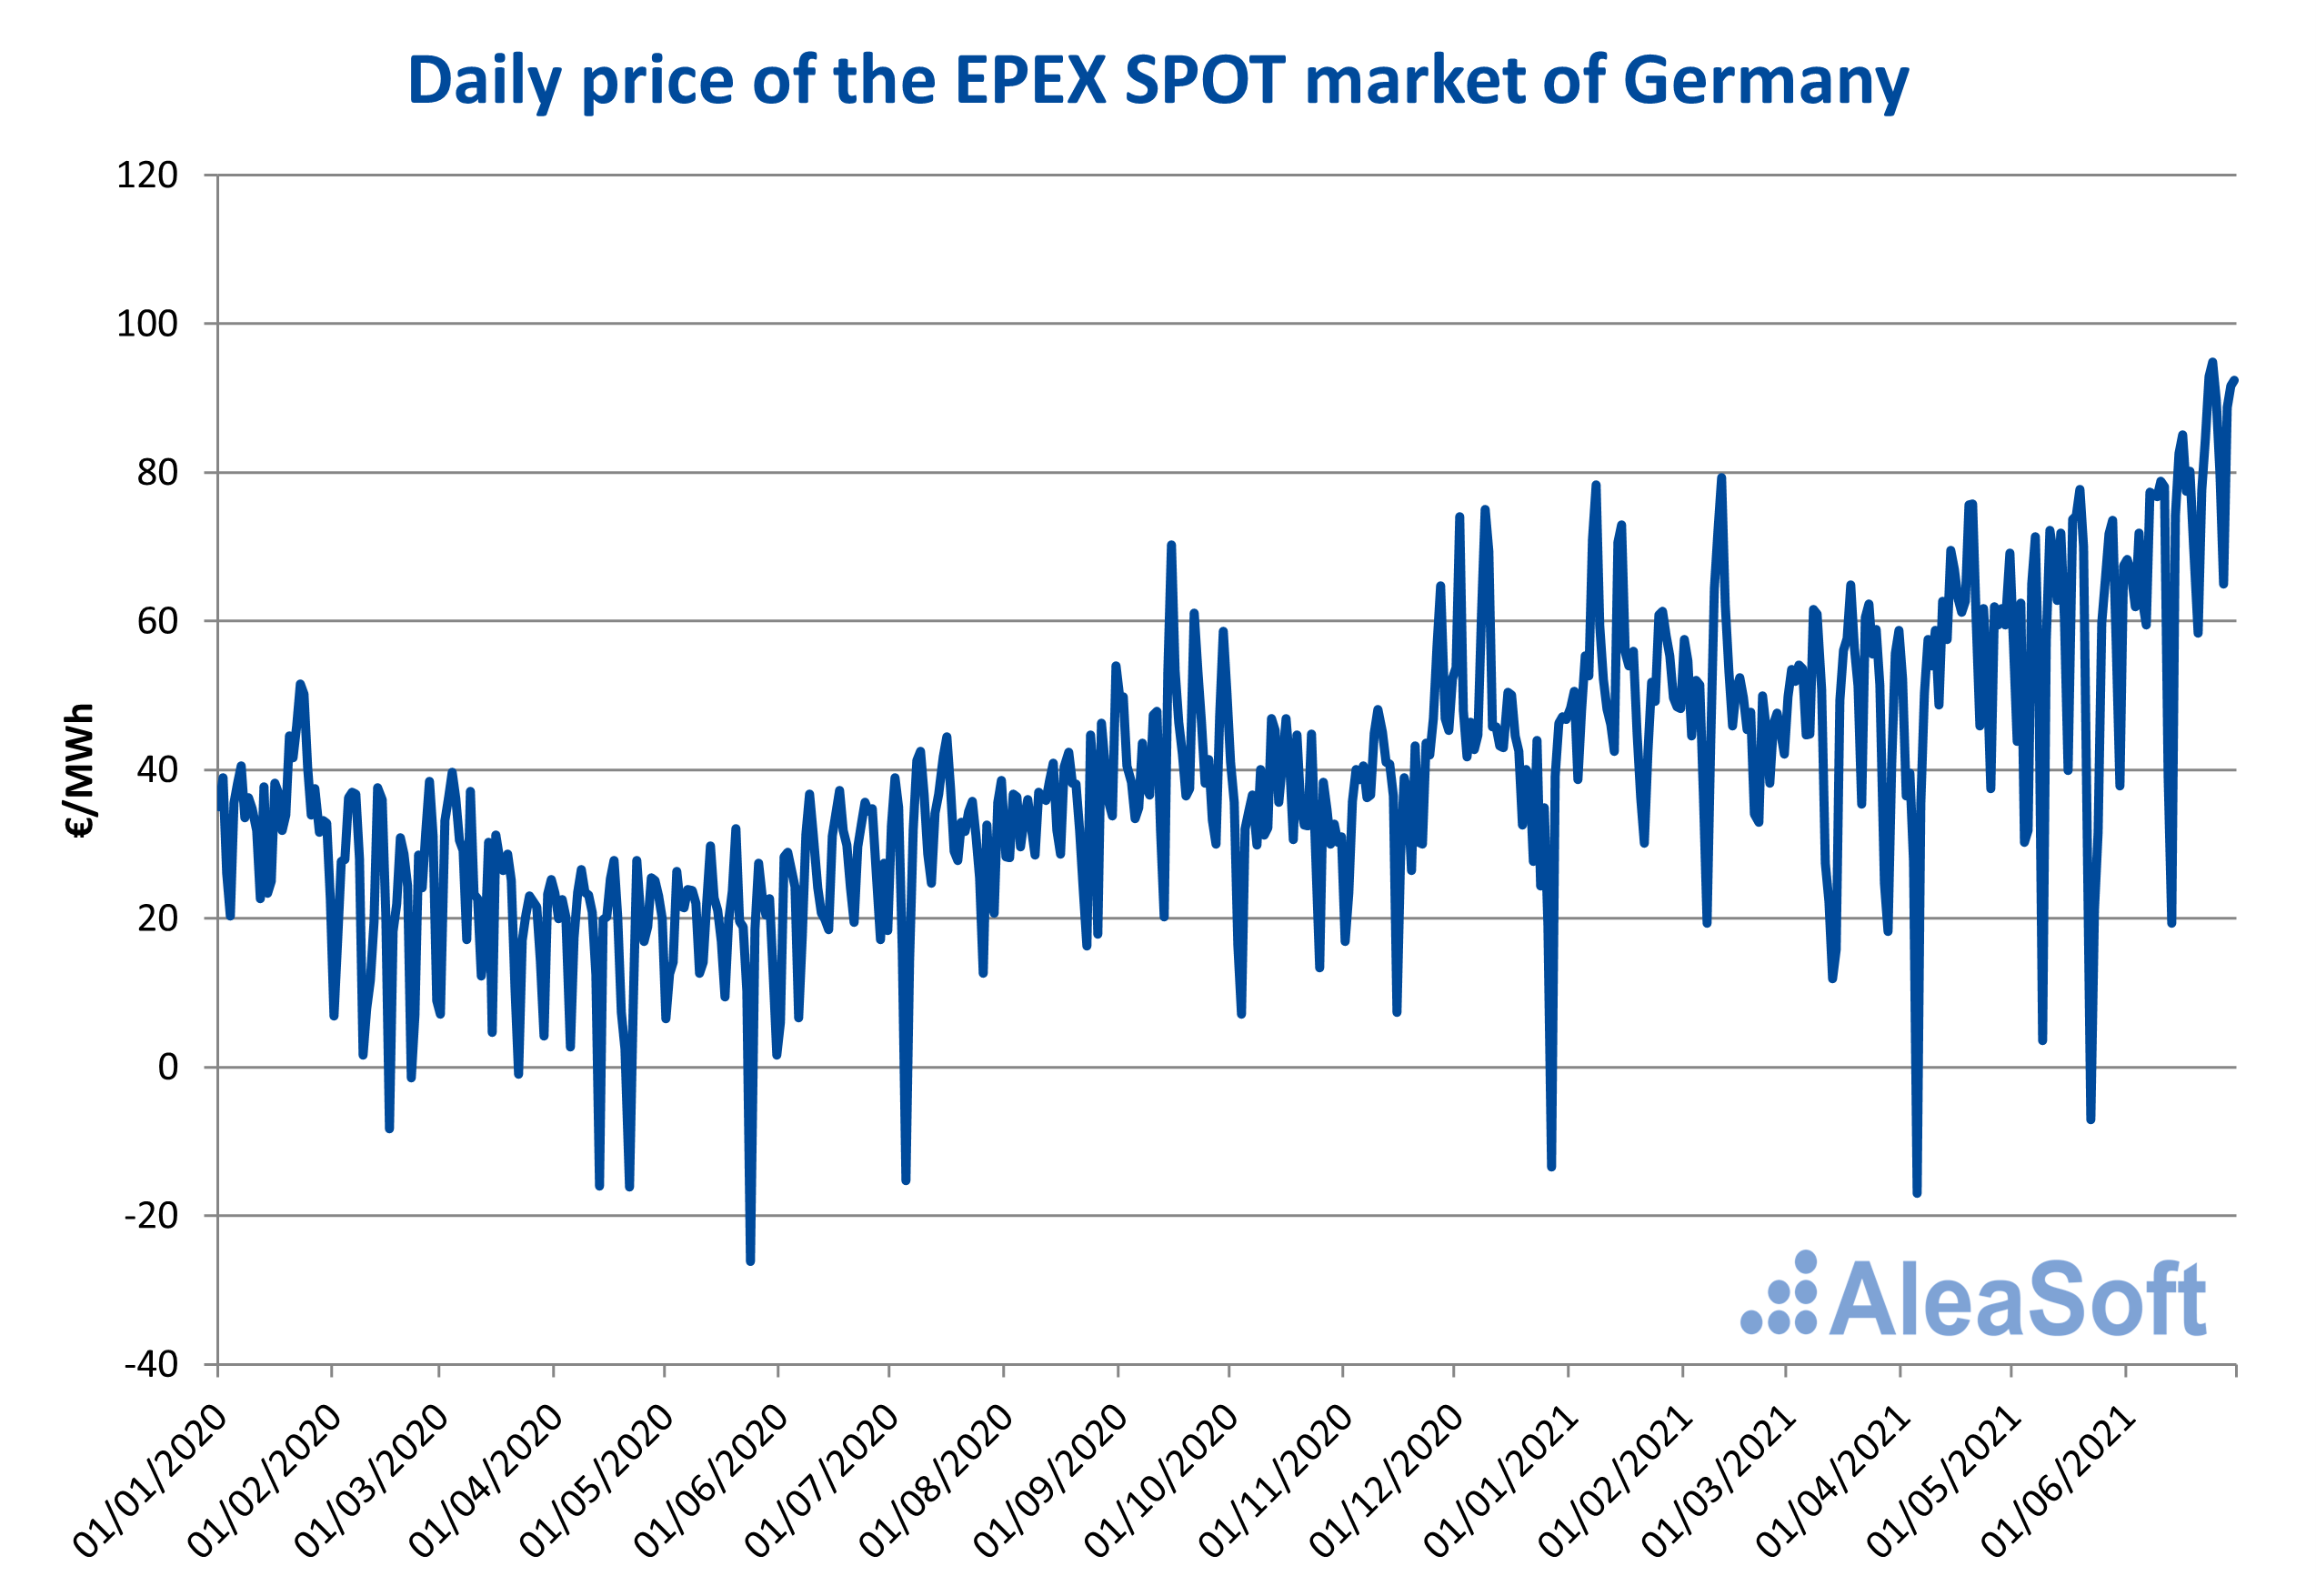 AleaSoft - Daily price epex spot market germany